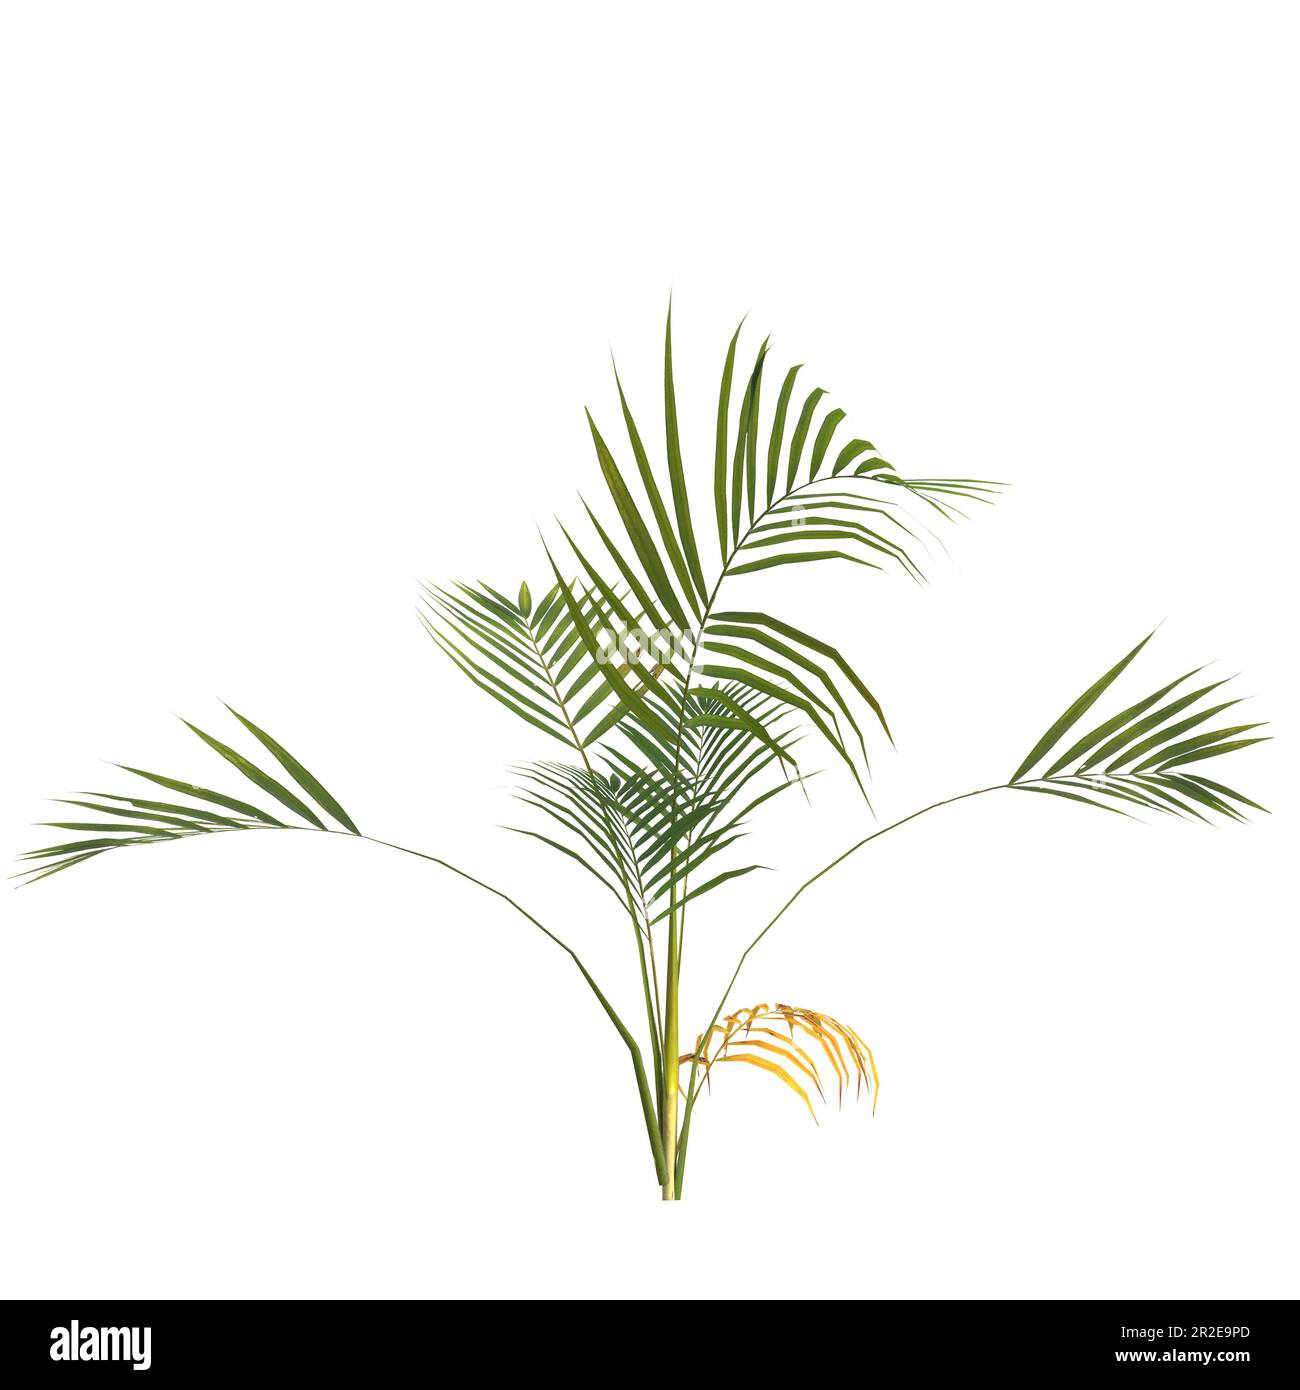 3d illustration of areca palm plant isolated on white background Stock Photo